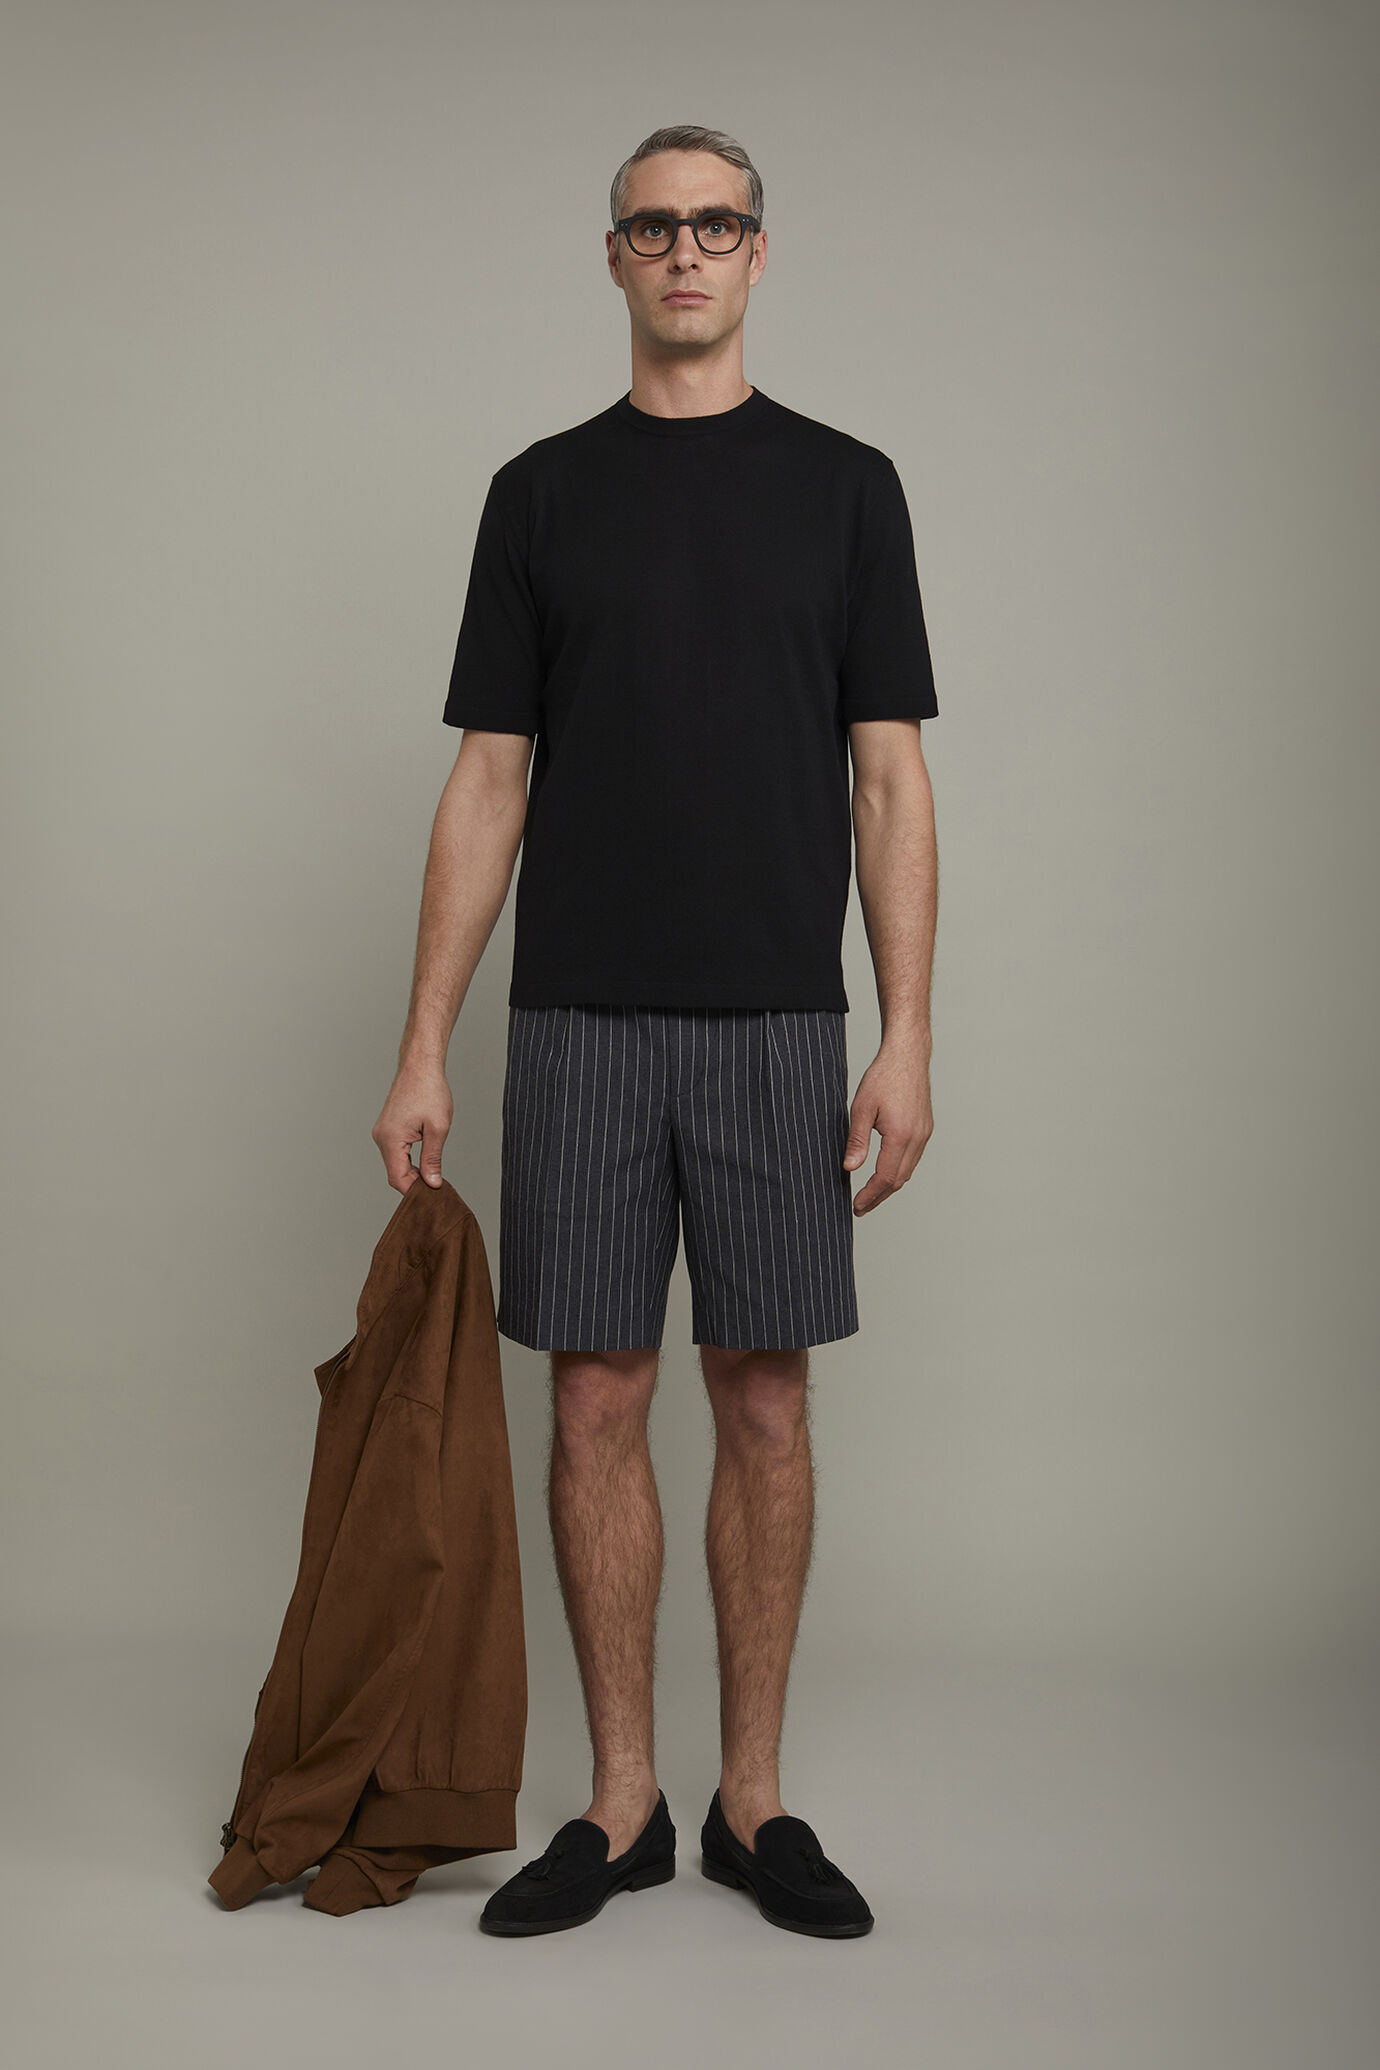 Men's knitted t-shirt 100% cotton short-sleeved regular fit image number 0